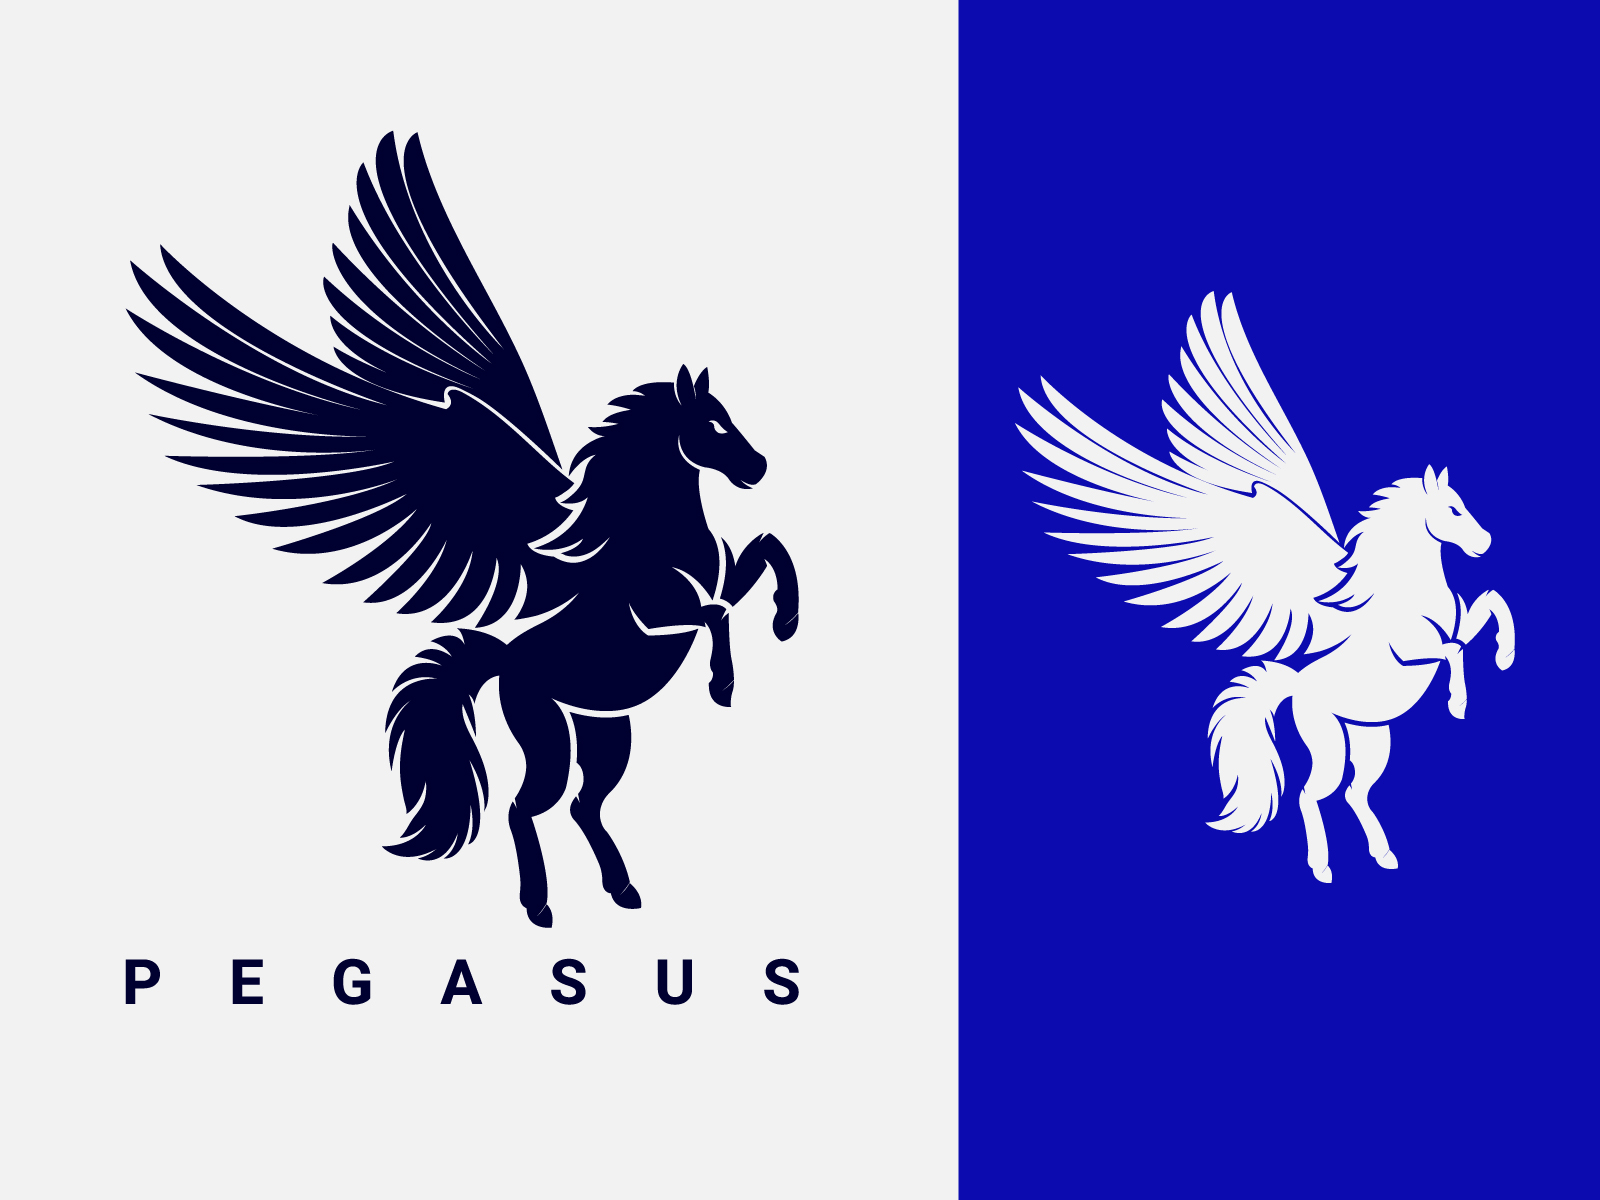 Image Details IST_13929_03227 - Pegasus logo vector. Stylized winged horse  logo vector illustration.